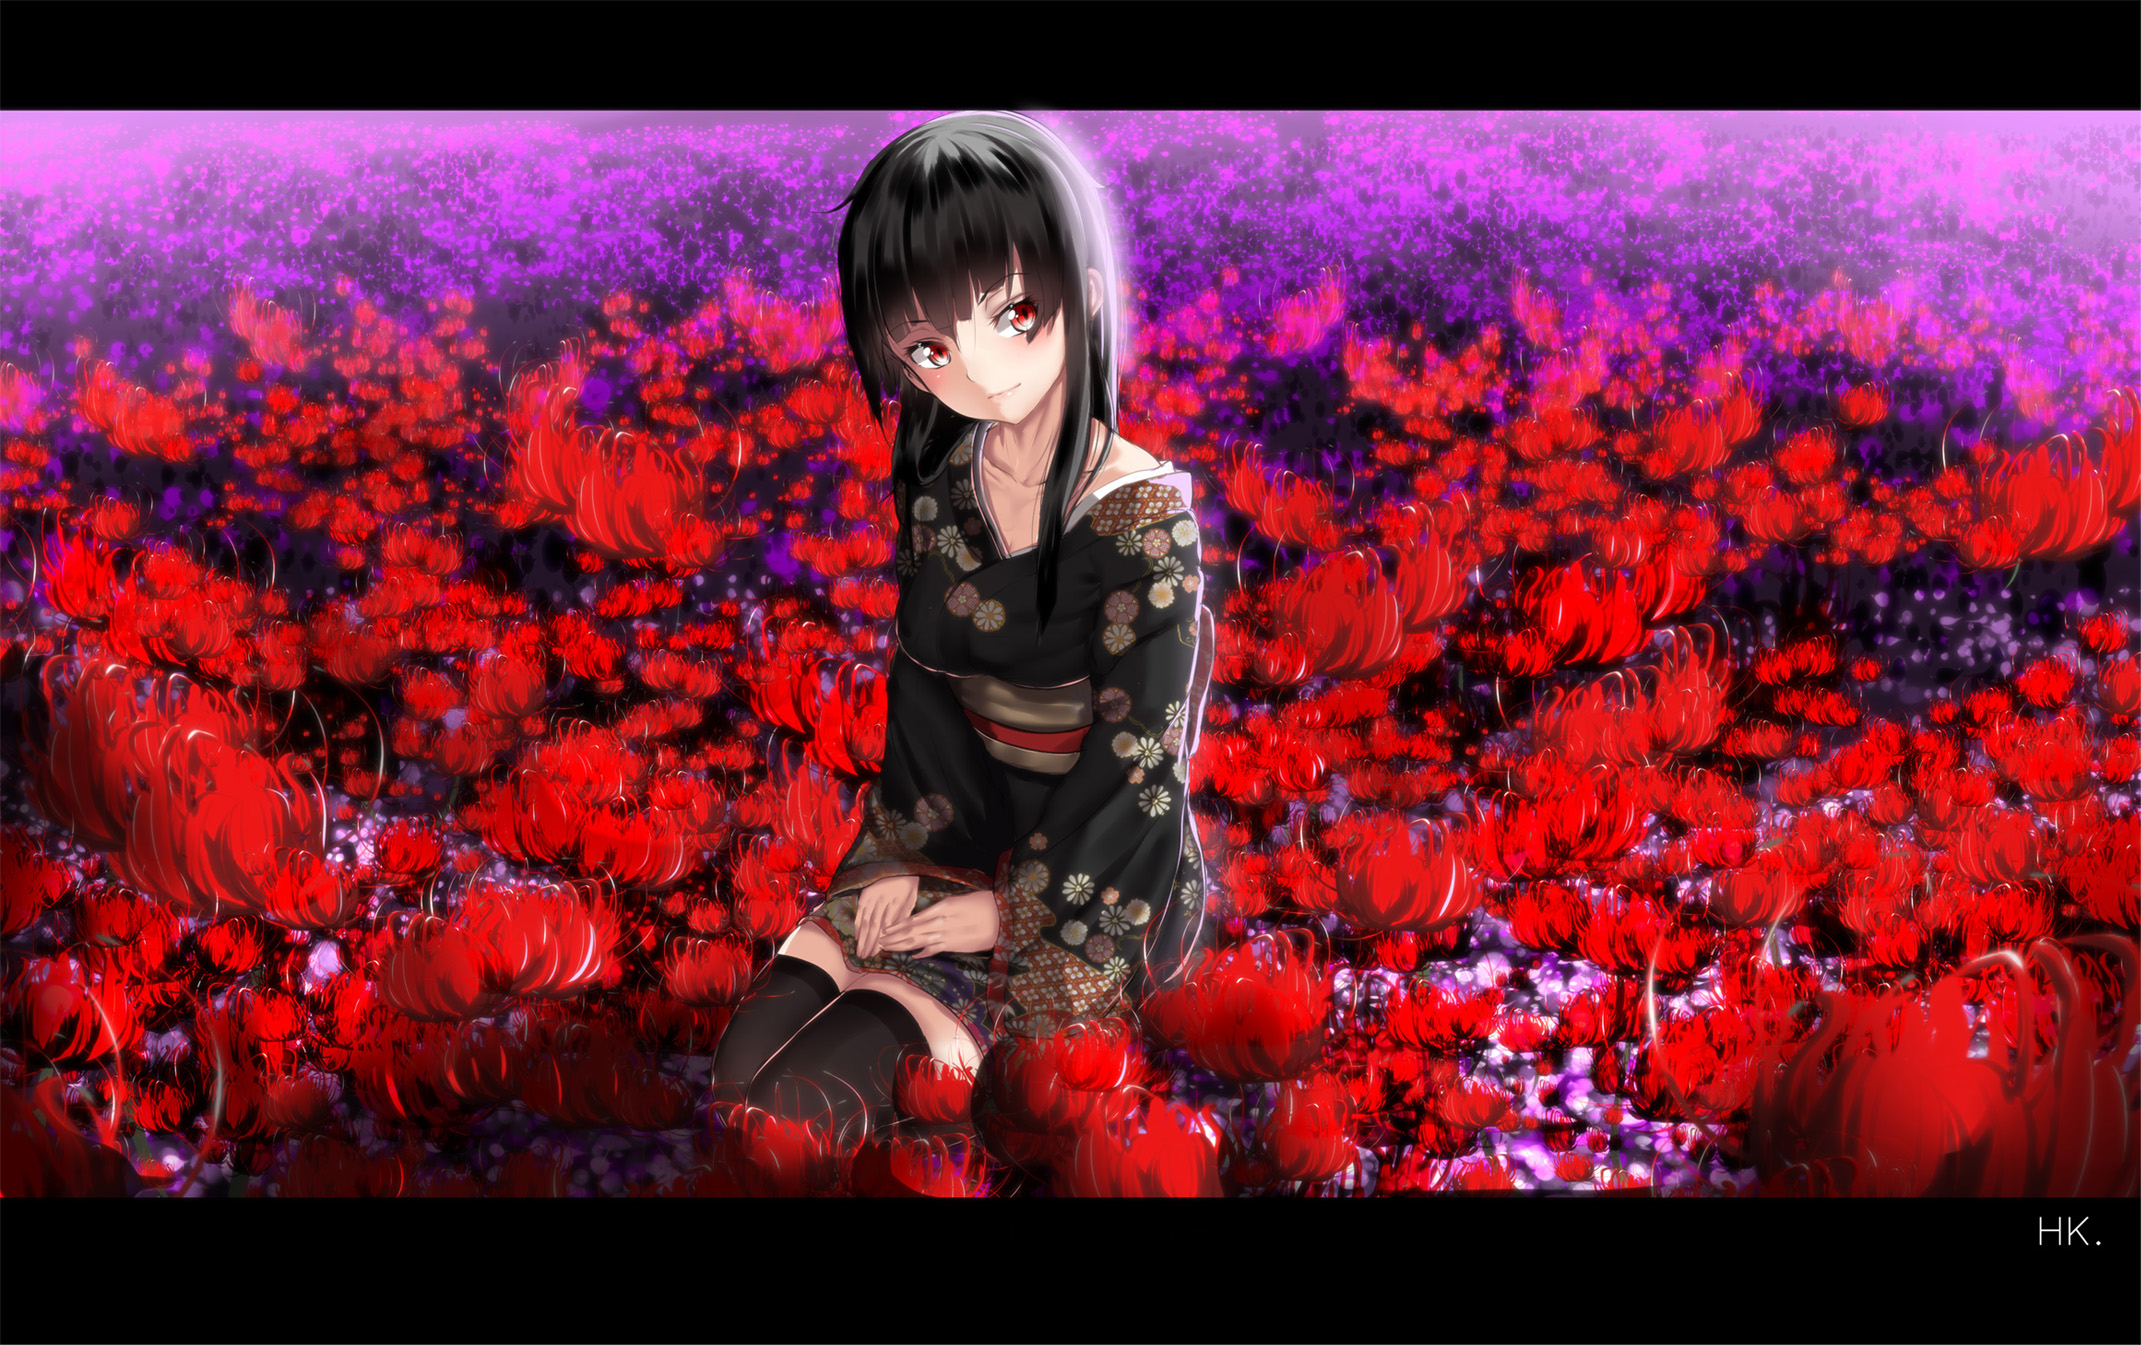 Anime 2141x1345 Jigoku Shoujo anime girls Enma Ai anime flowers plants red eyes dark hair sitting women outdoors outdoors Pixiv